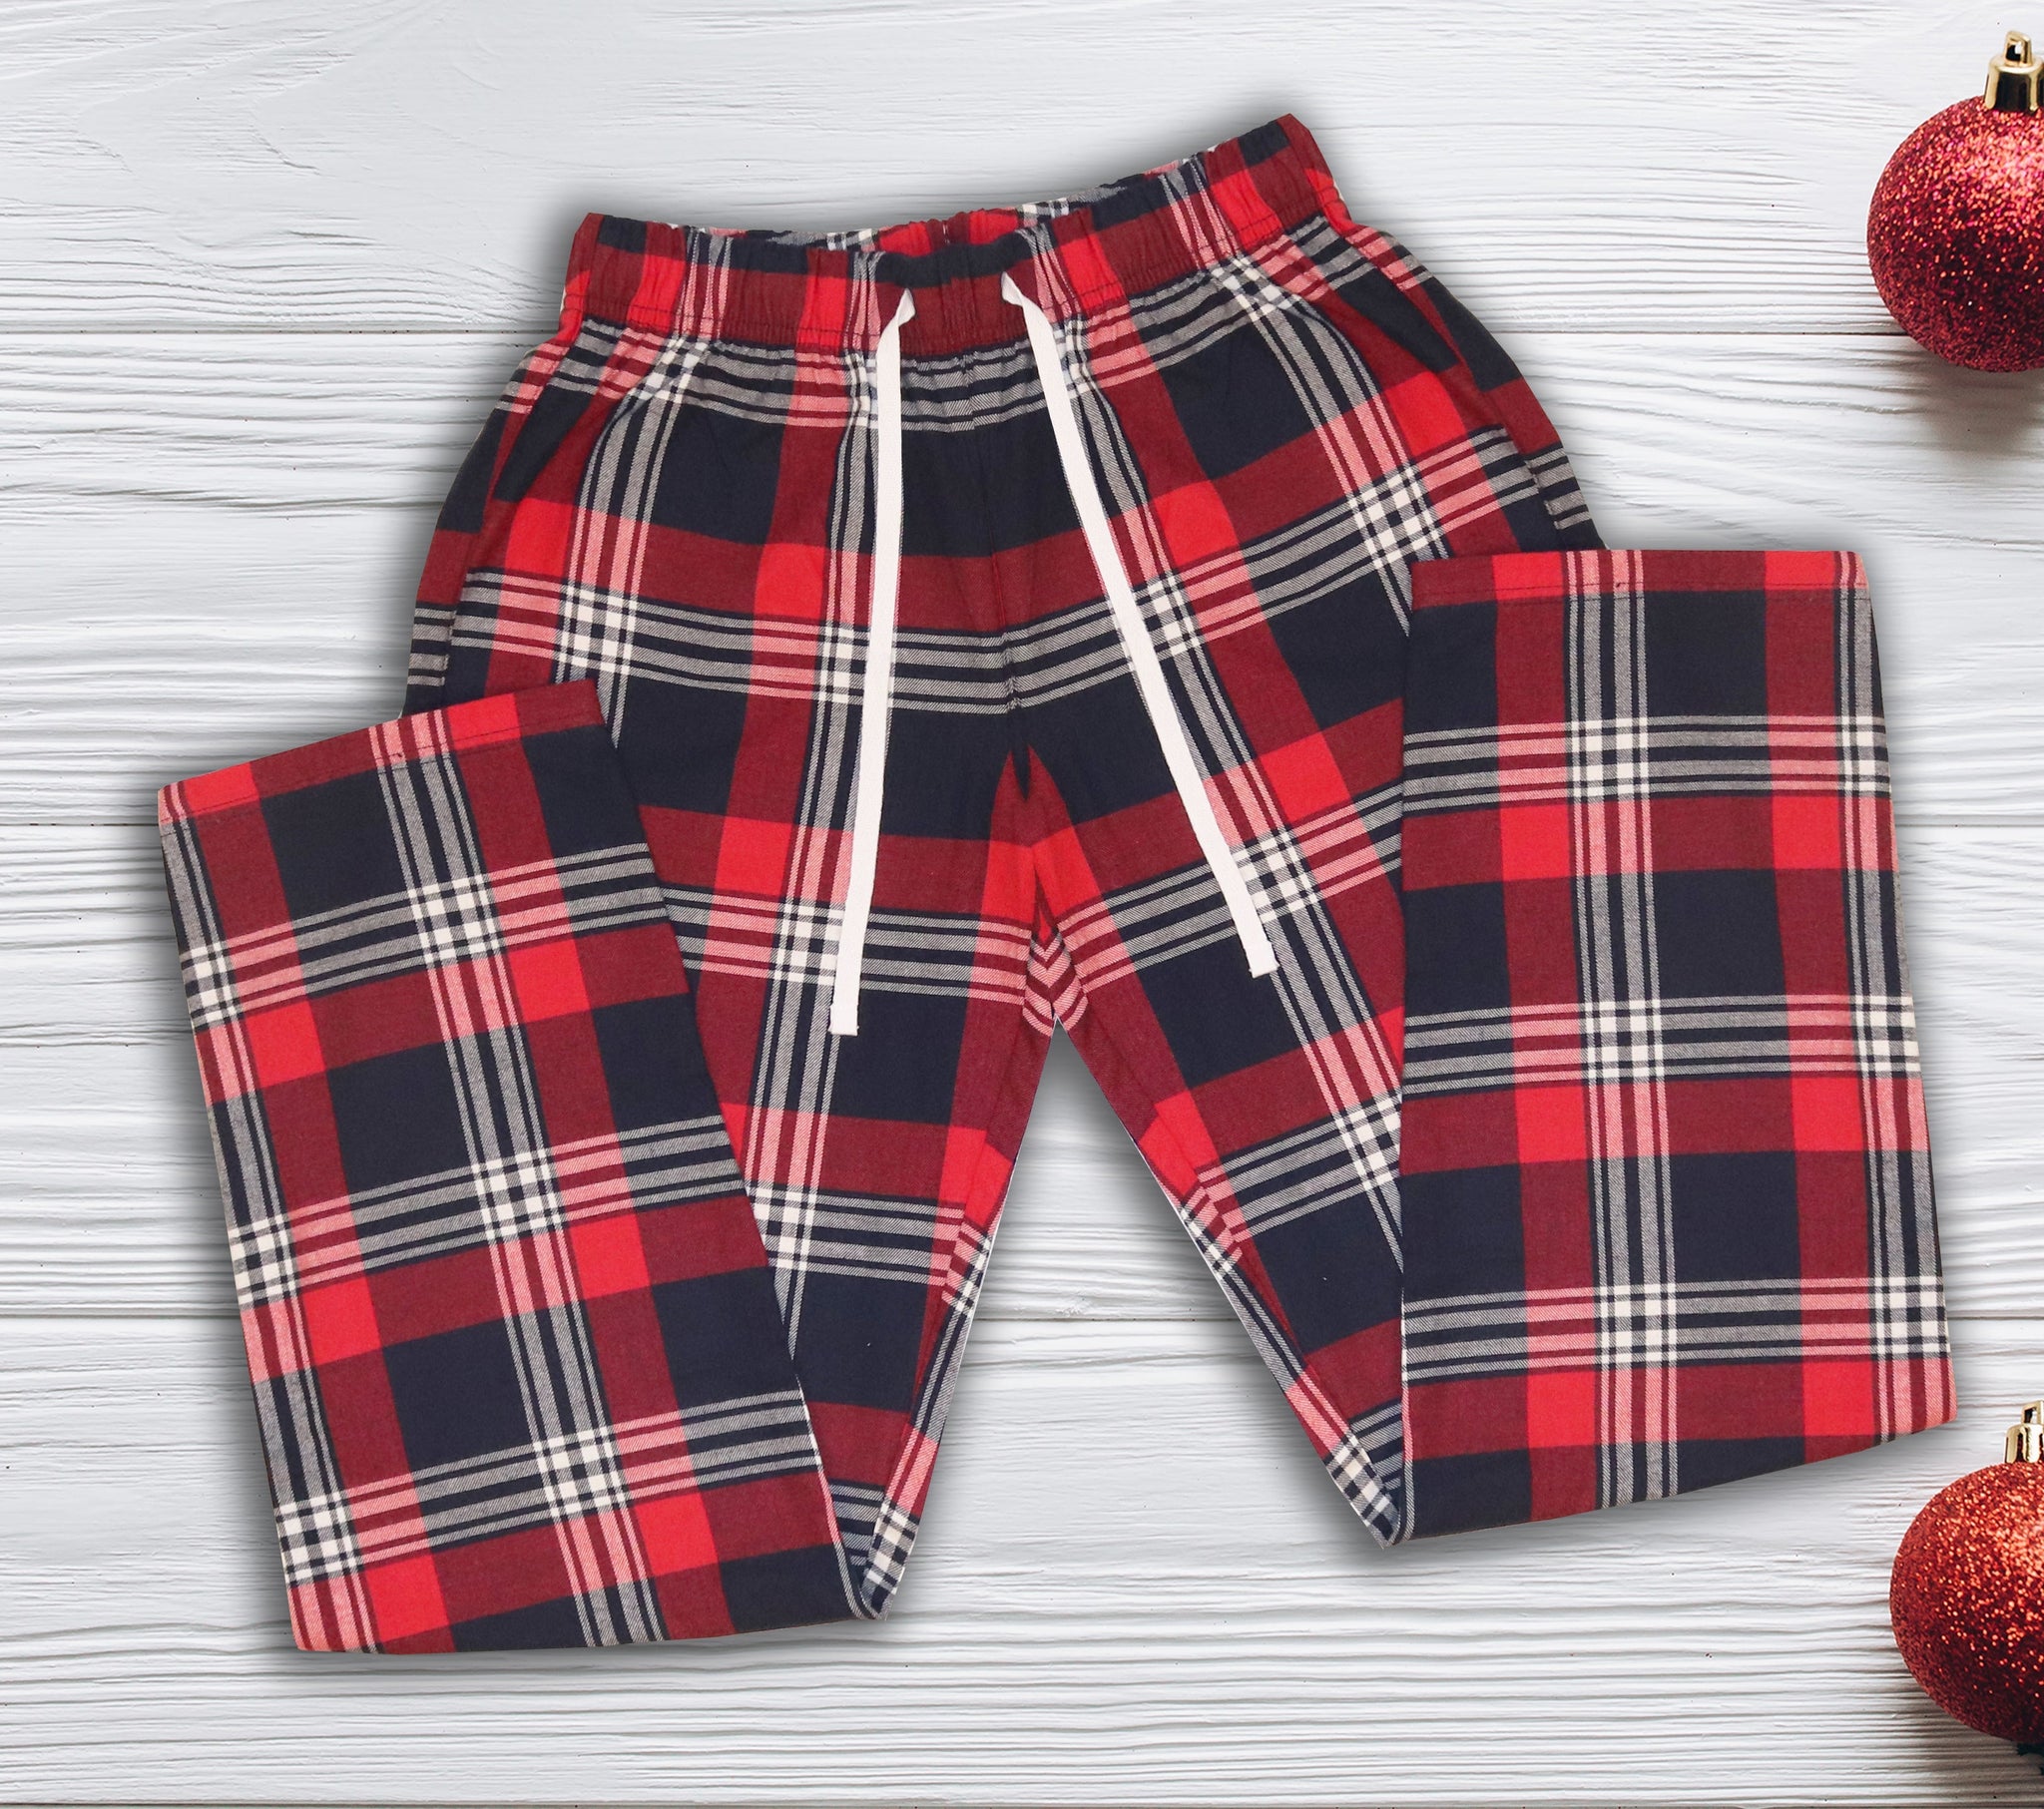 Personalised Santa's Little Helper - Family Matching Christmas Pyjamas - Top & Tartan PJ Bottoms